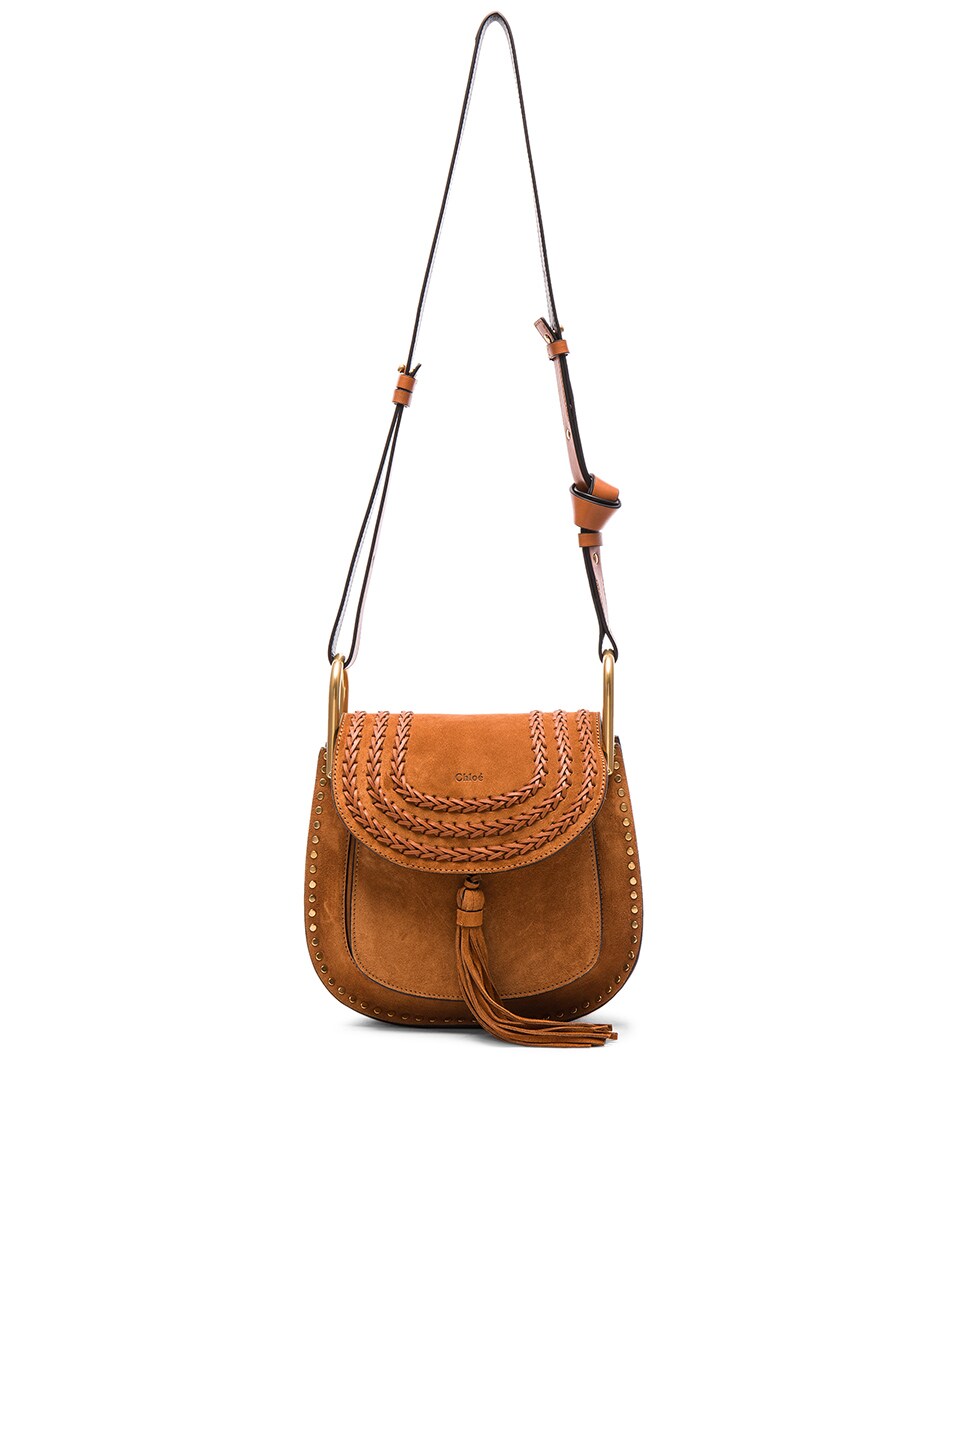 chloe mini elsie bag - Chloe Small Suede Hudson Bag in Caramel | FWRD